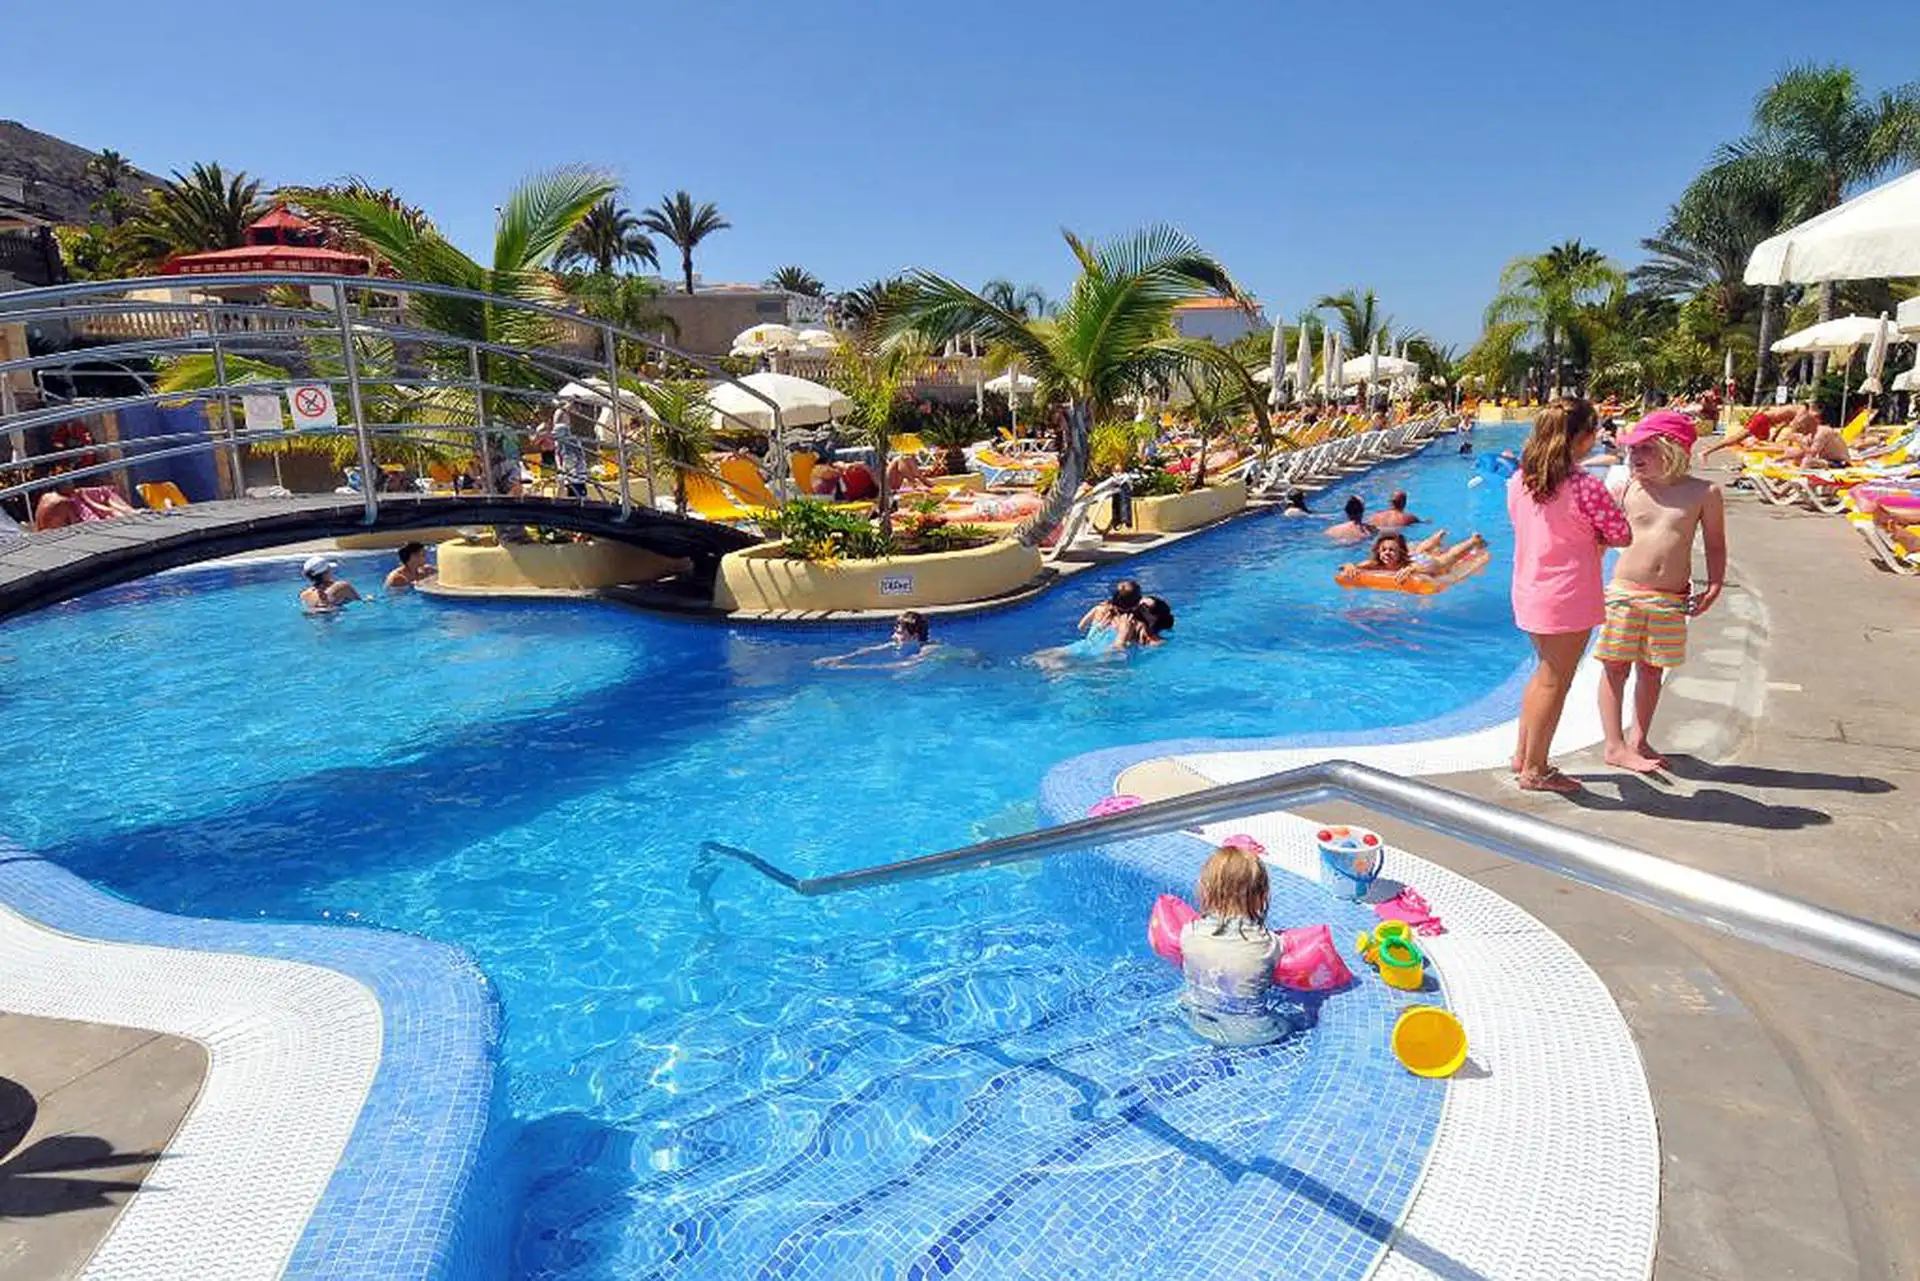 Paradise Park Fun LifeStyle Hotel, Tenerife, Spain